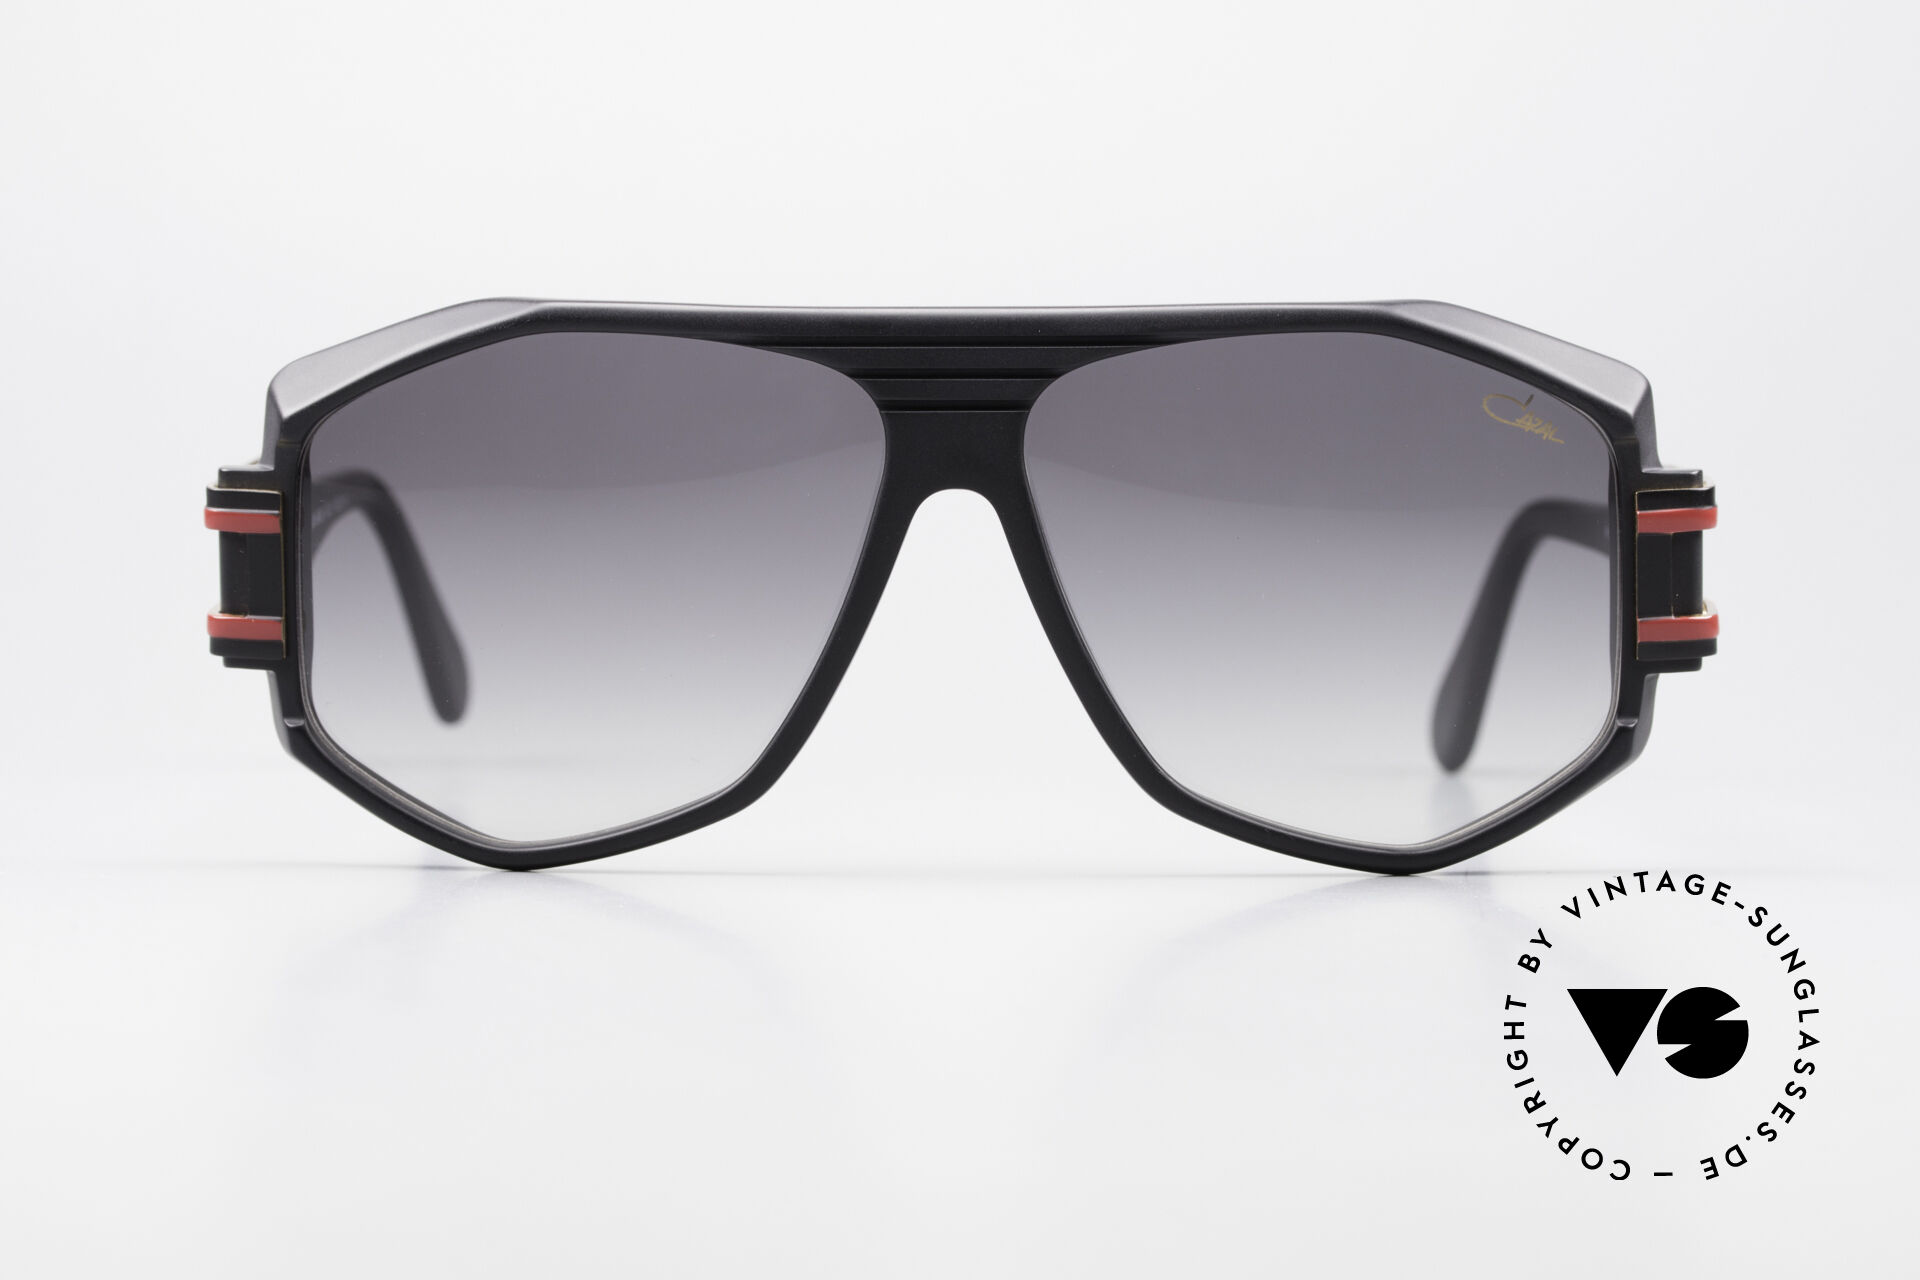 Sunglasses Cazal 873 | Cazal Eyewear created by Austrian des… | Flickr